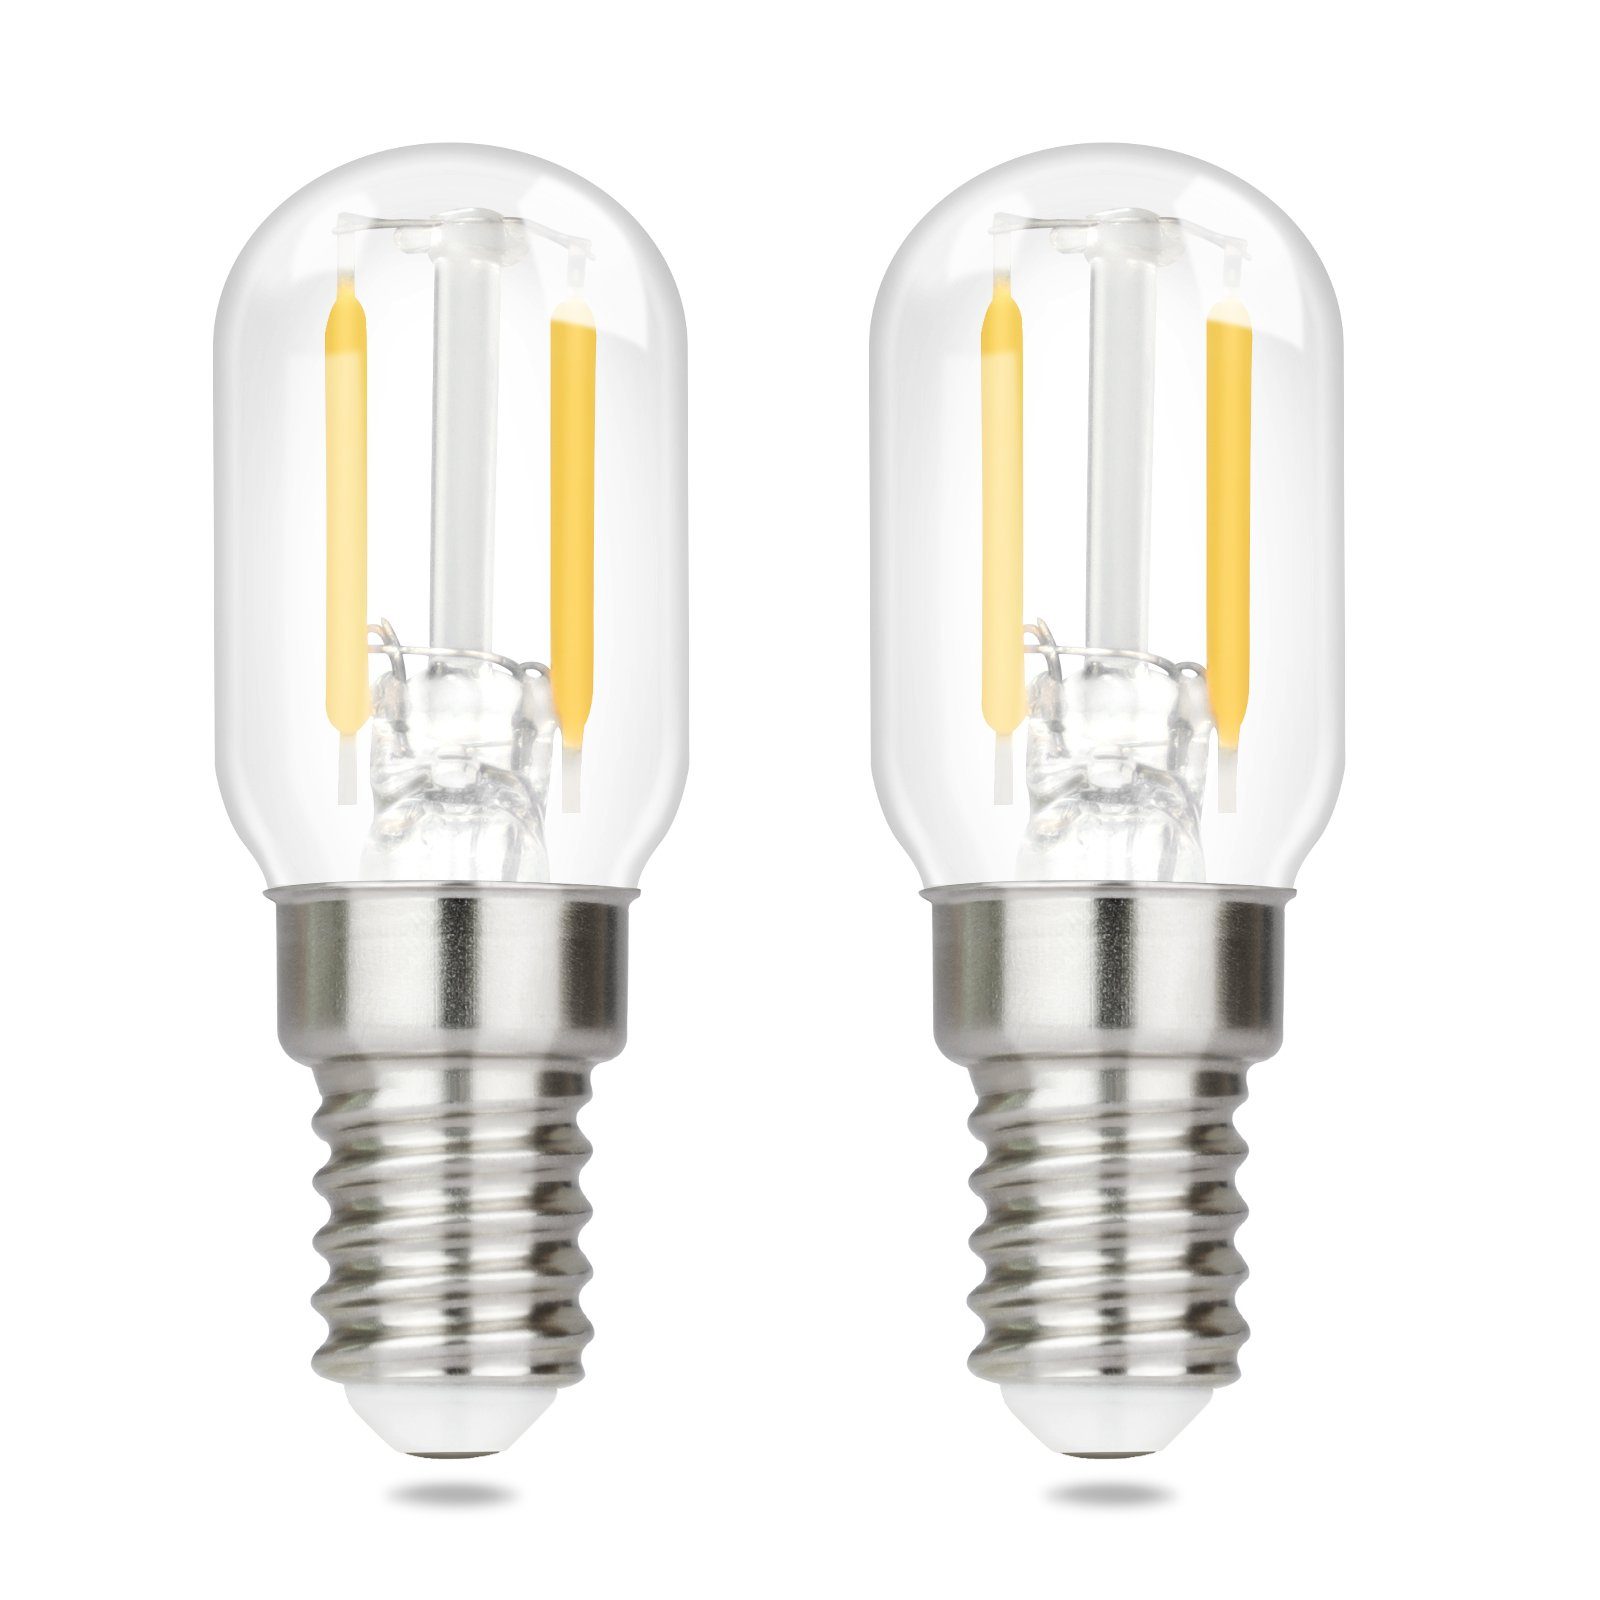 Nettlife LED-Leuchtmittel LED Leuchtmittel E14 Vintage Glühbirnen T22 Lampe Birnen 2W, E14, 2 St., Warmweiß, 2700K Transparente